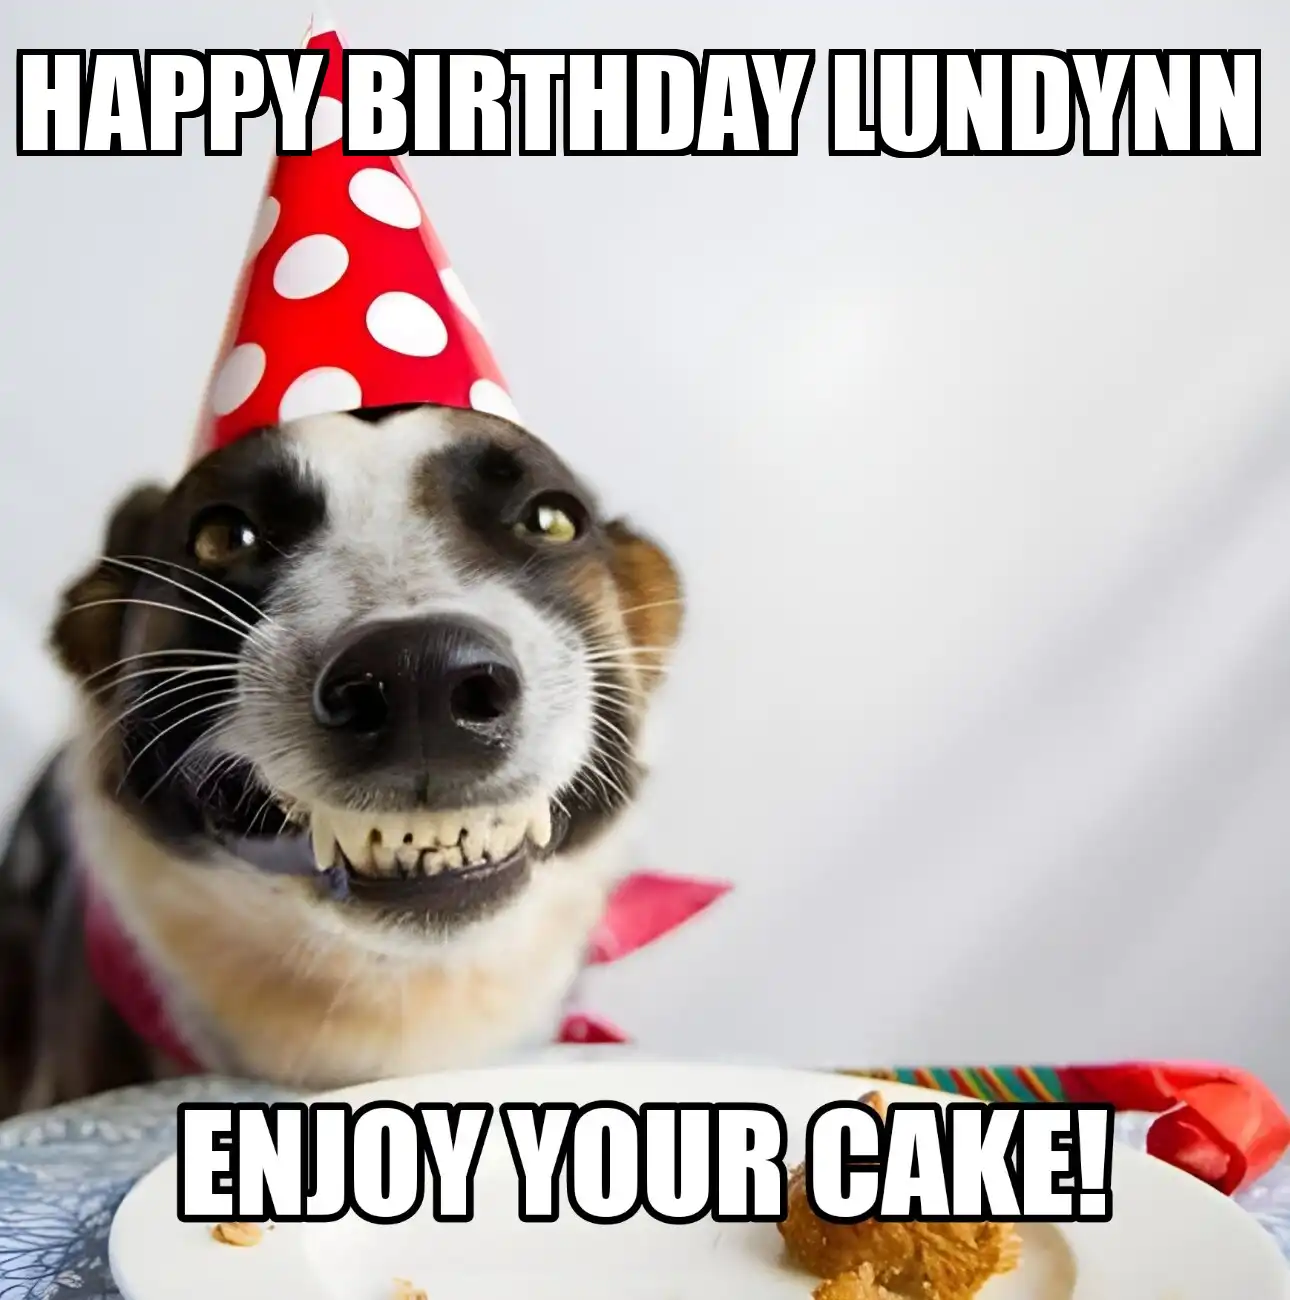 Happy Birthday Lundynn Enjoy Your Cake Dog Meme